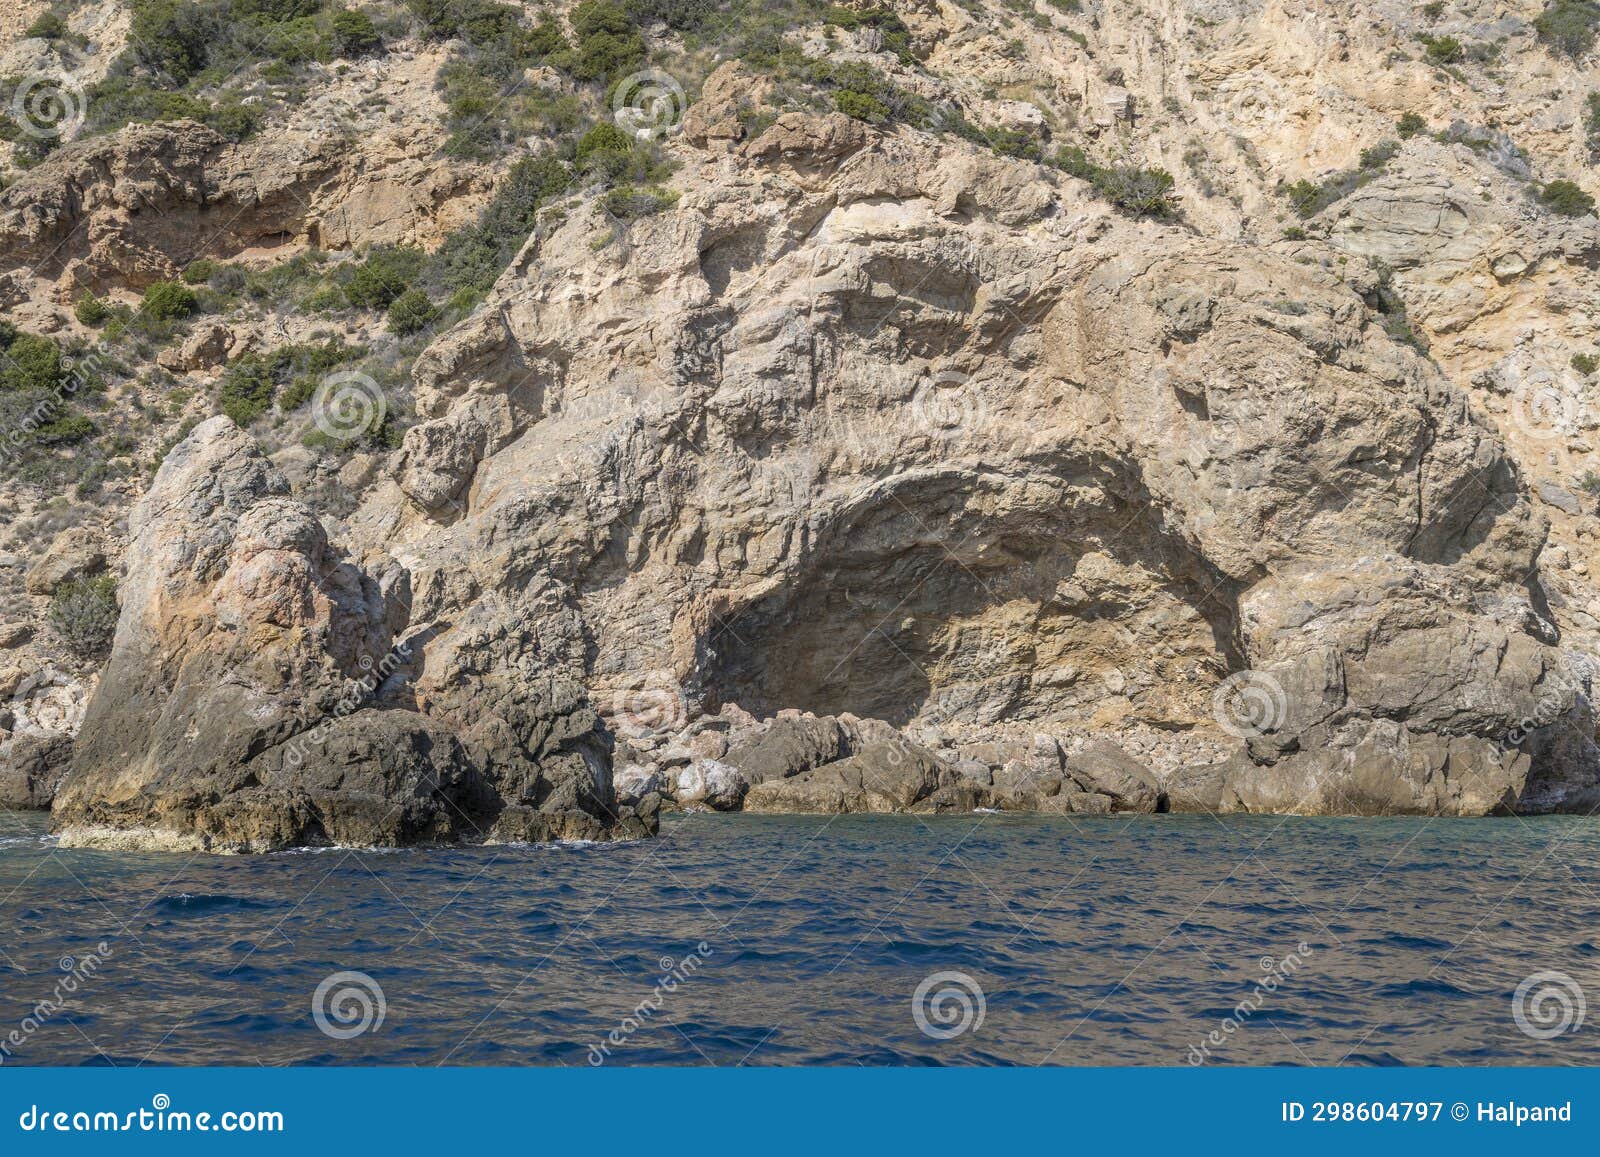 igneous rock hole in cliffs at uomo cape, argentario, italy